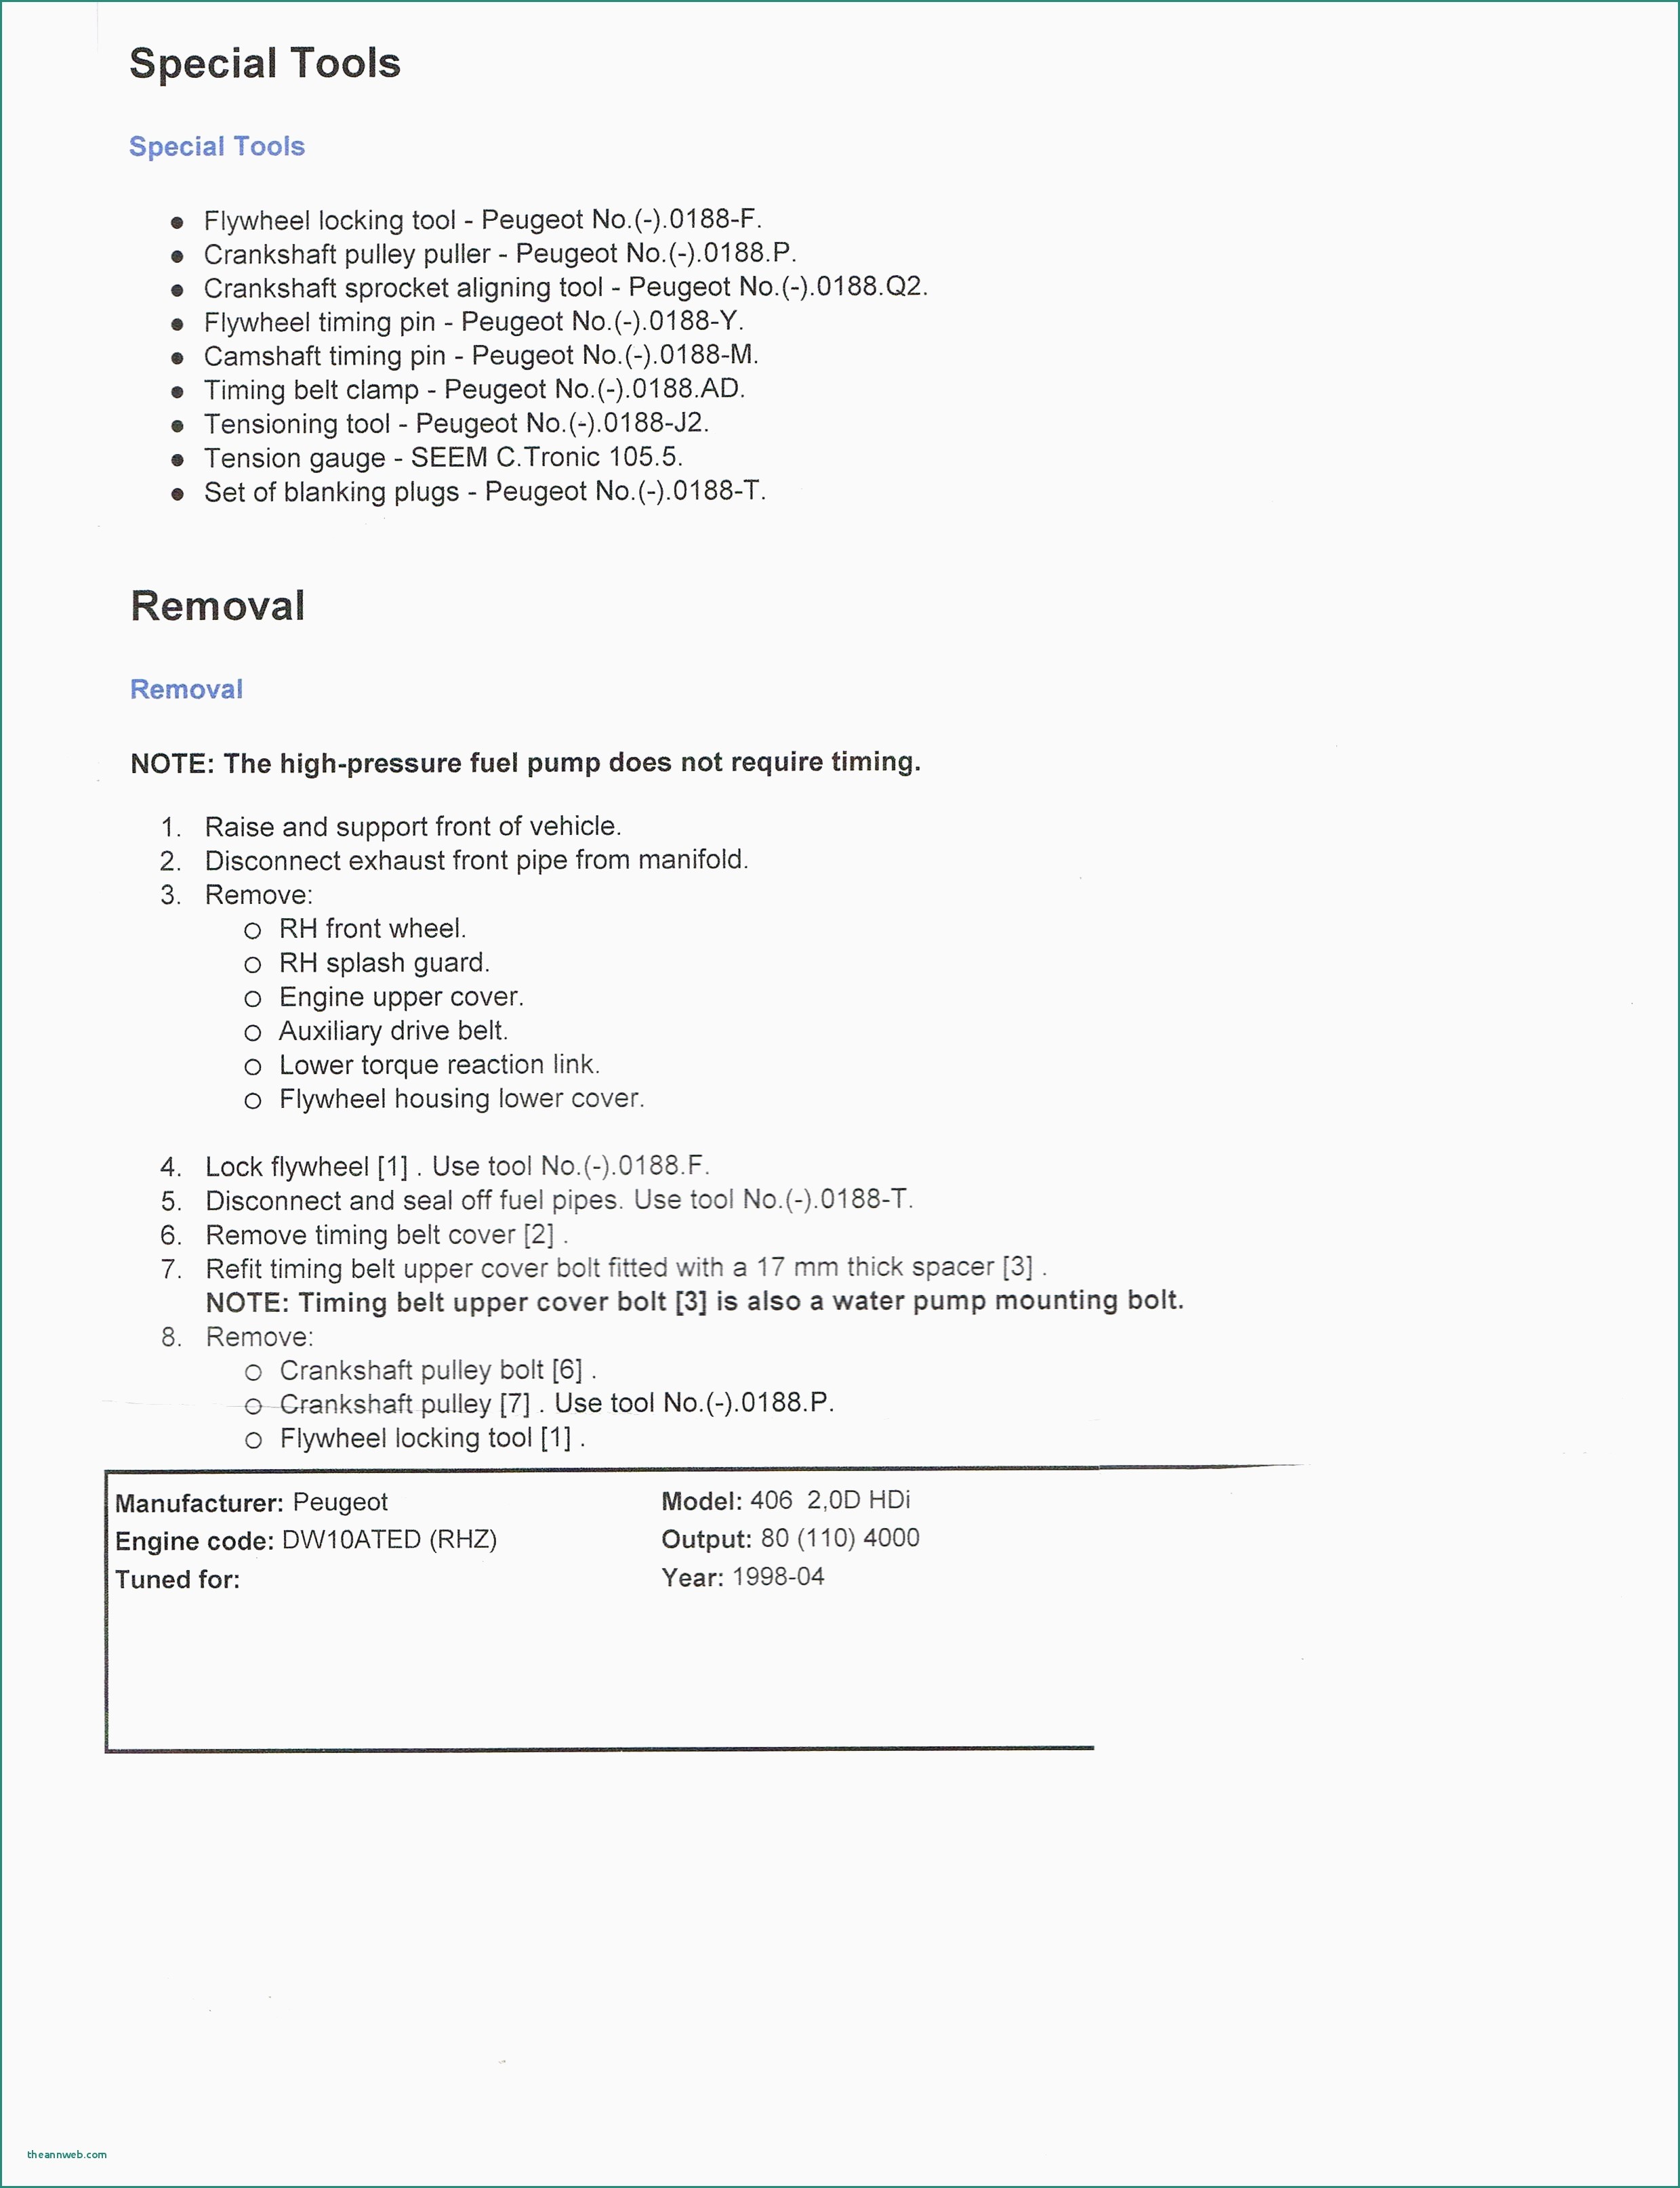 Resume Objective Example Nursing Resume Objective New Grad Examples Nurse resume objective example|wikiresume.com